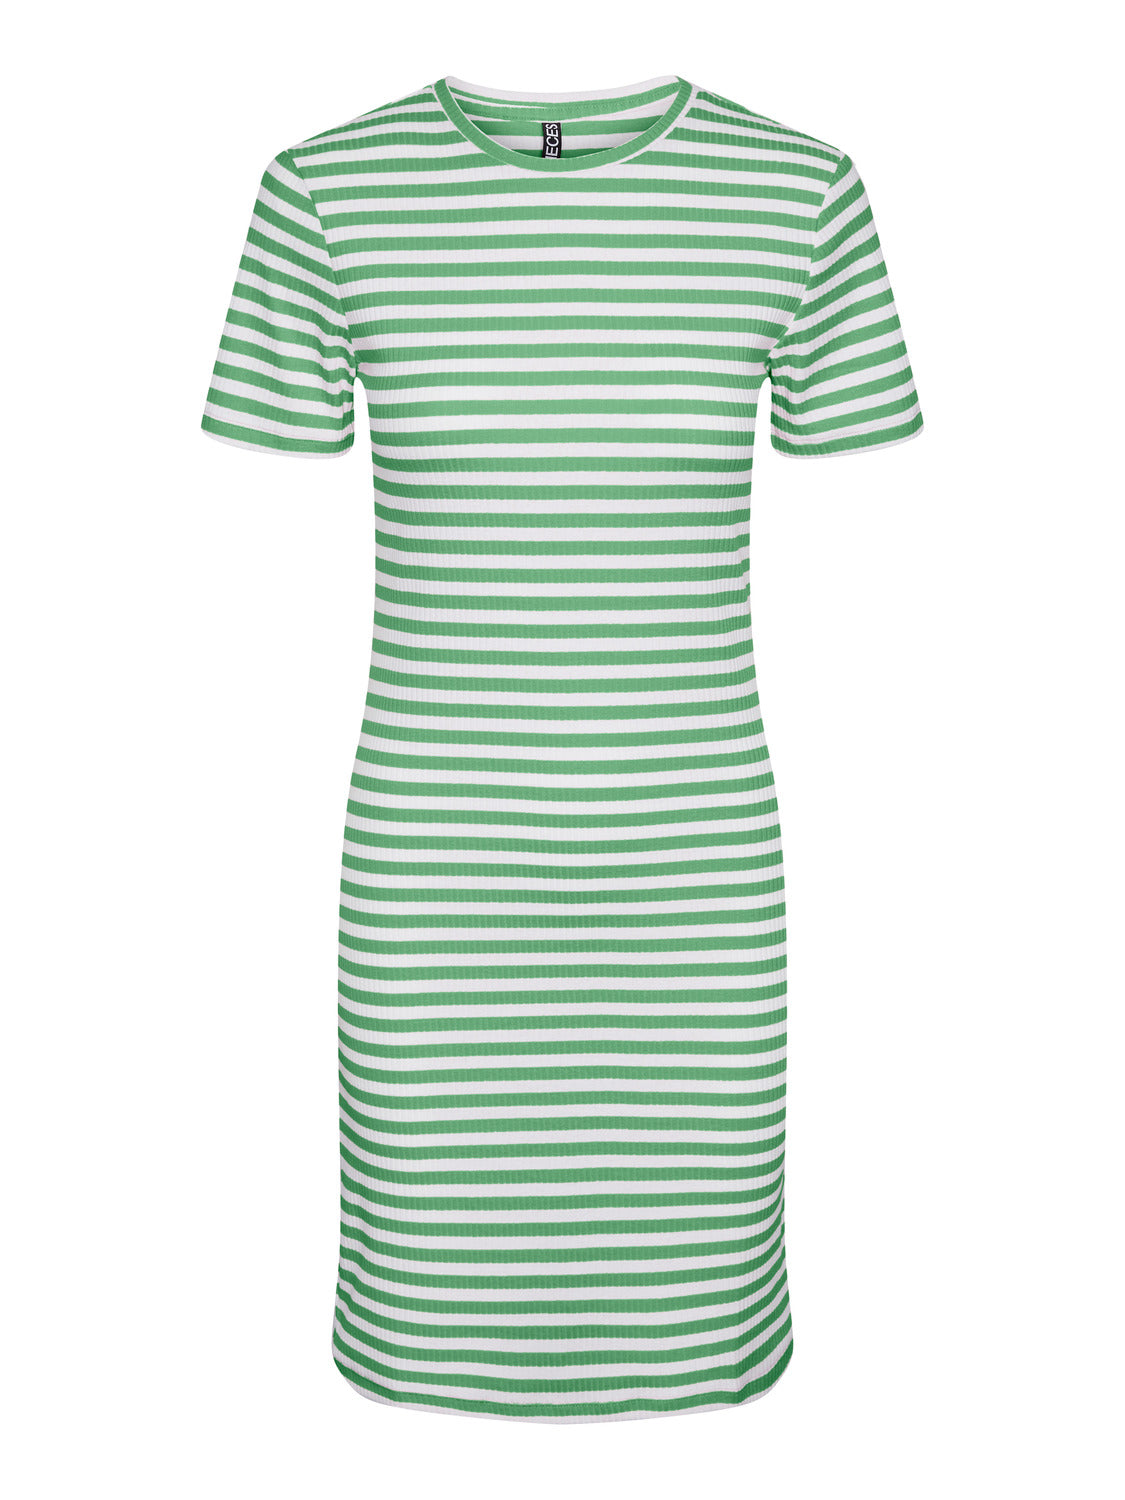 PCRUKA Dress - Absinthe Green